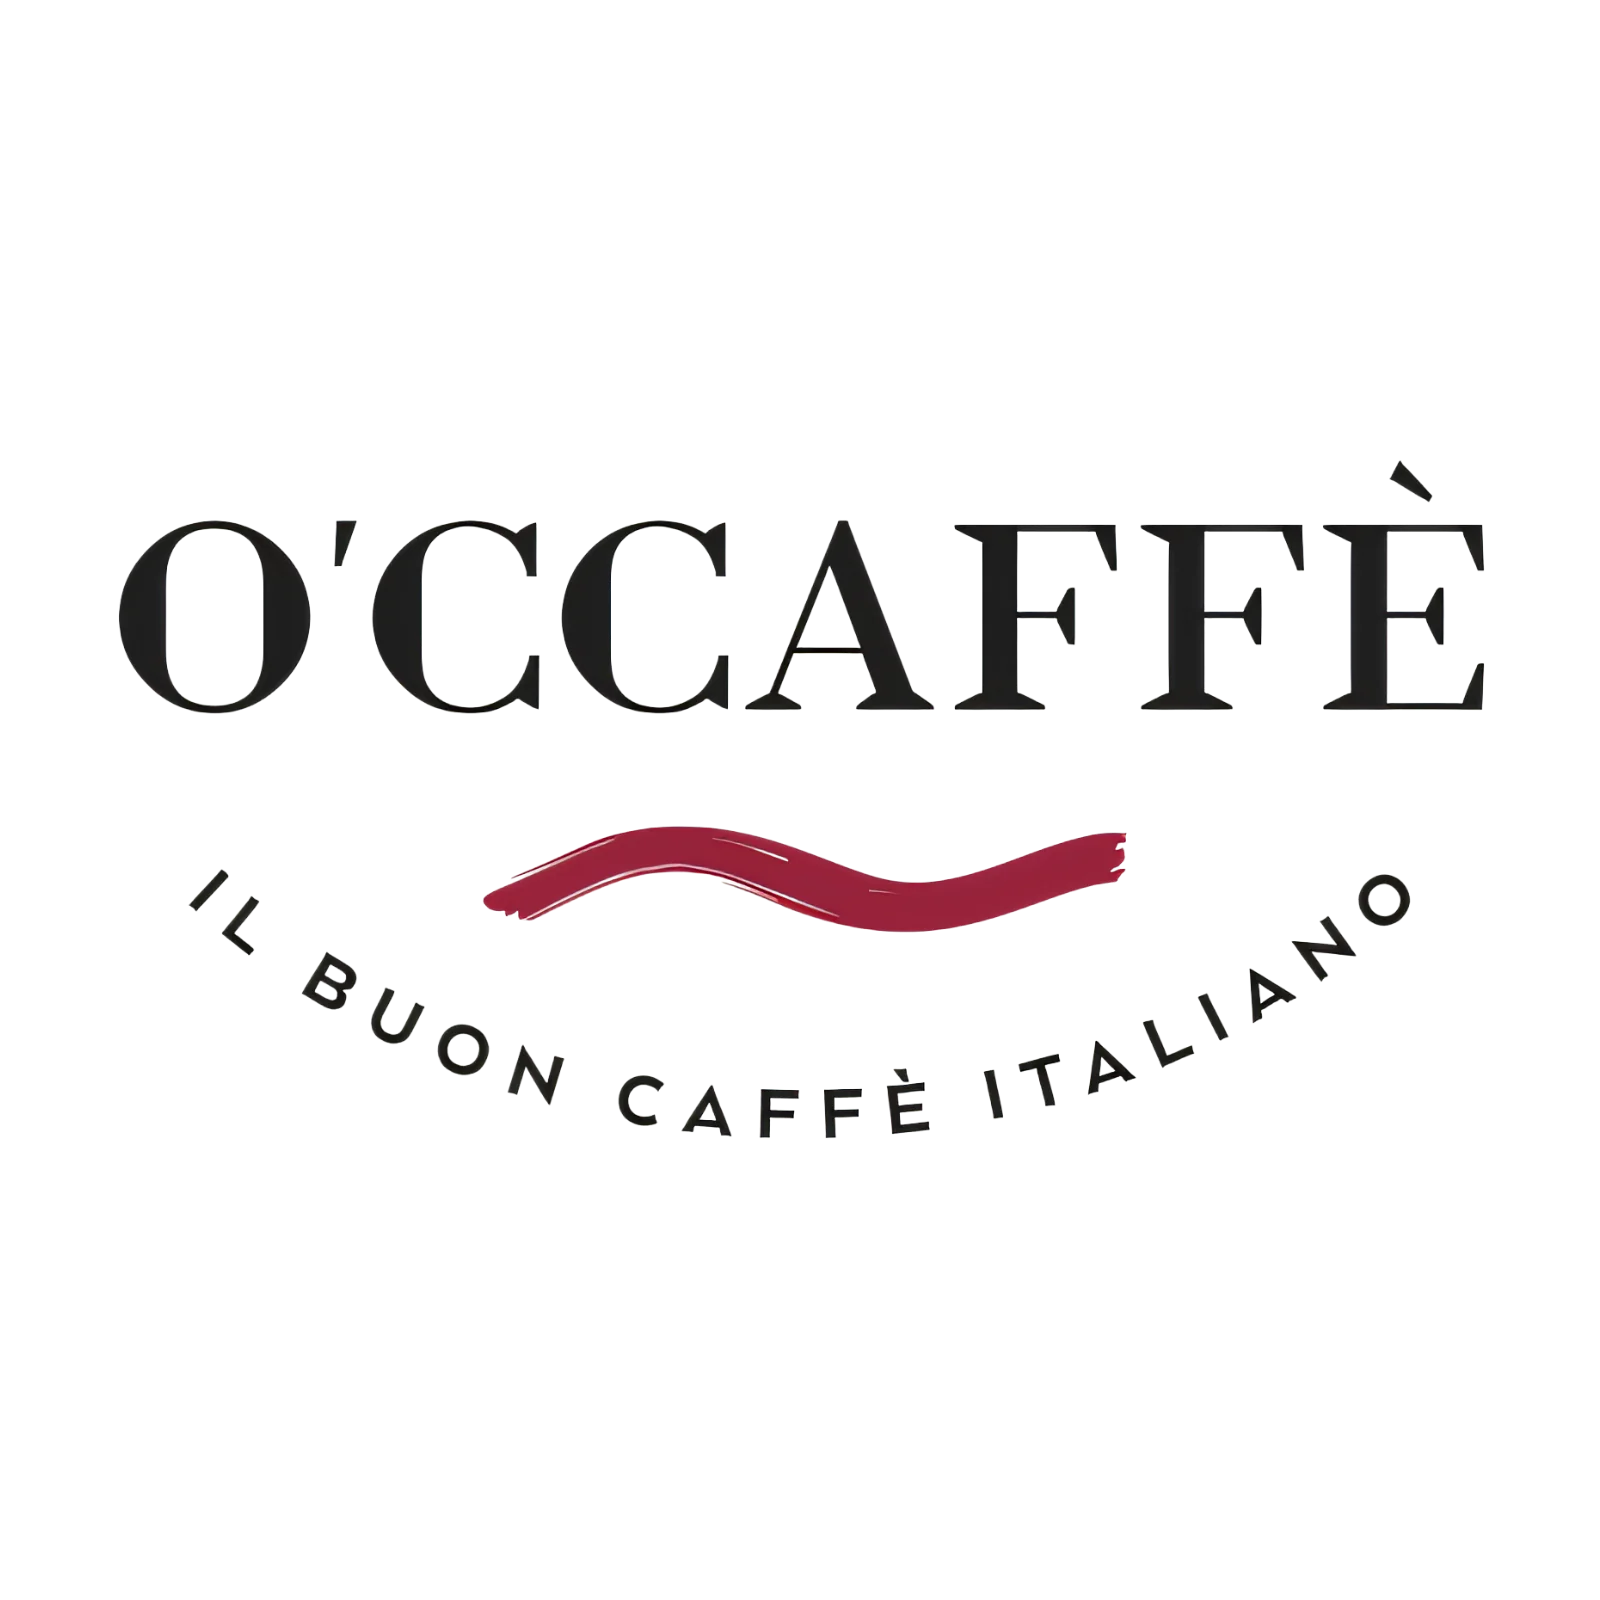 O'ccaffè Café Crème Proffesional 1kg - rostade kaffebönor